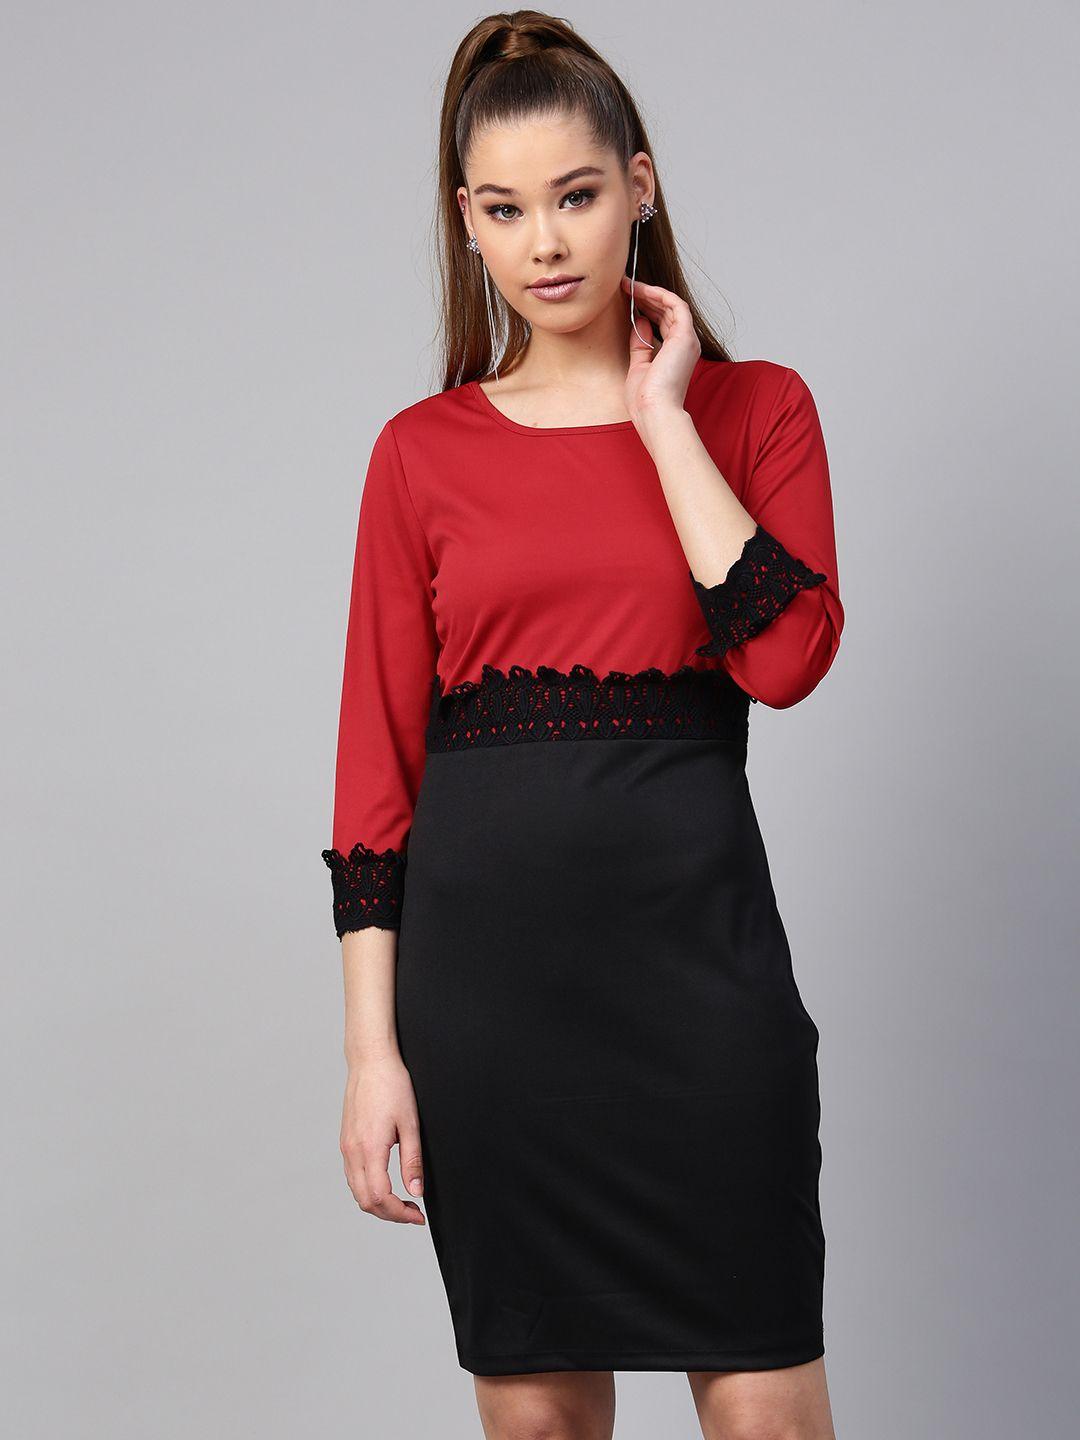 street 9 women black & red colourblocked sheath dress